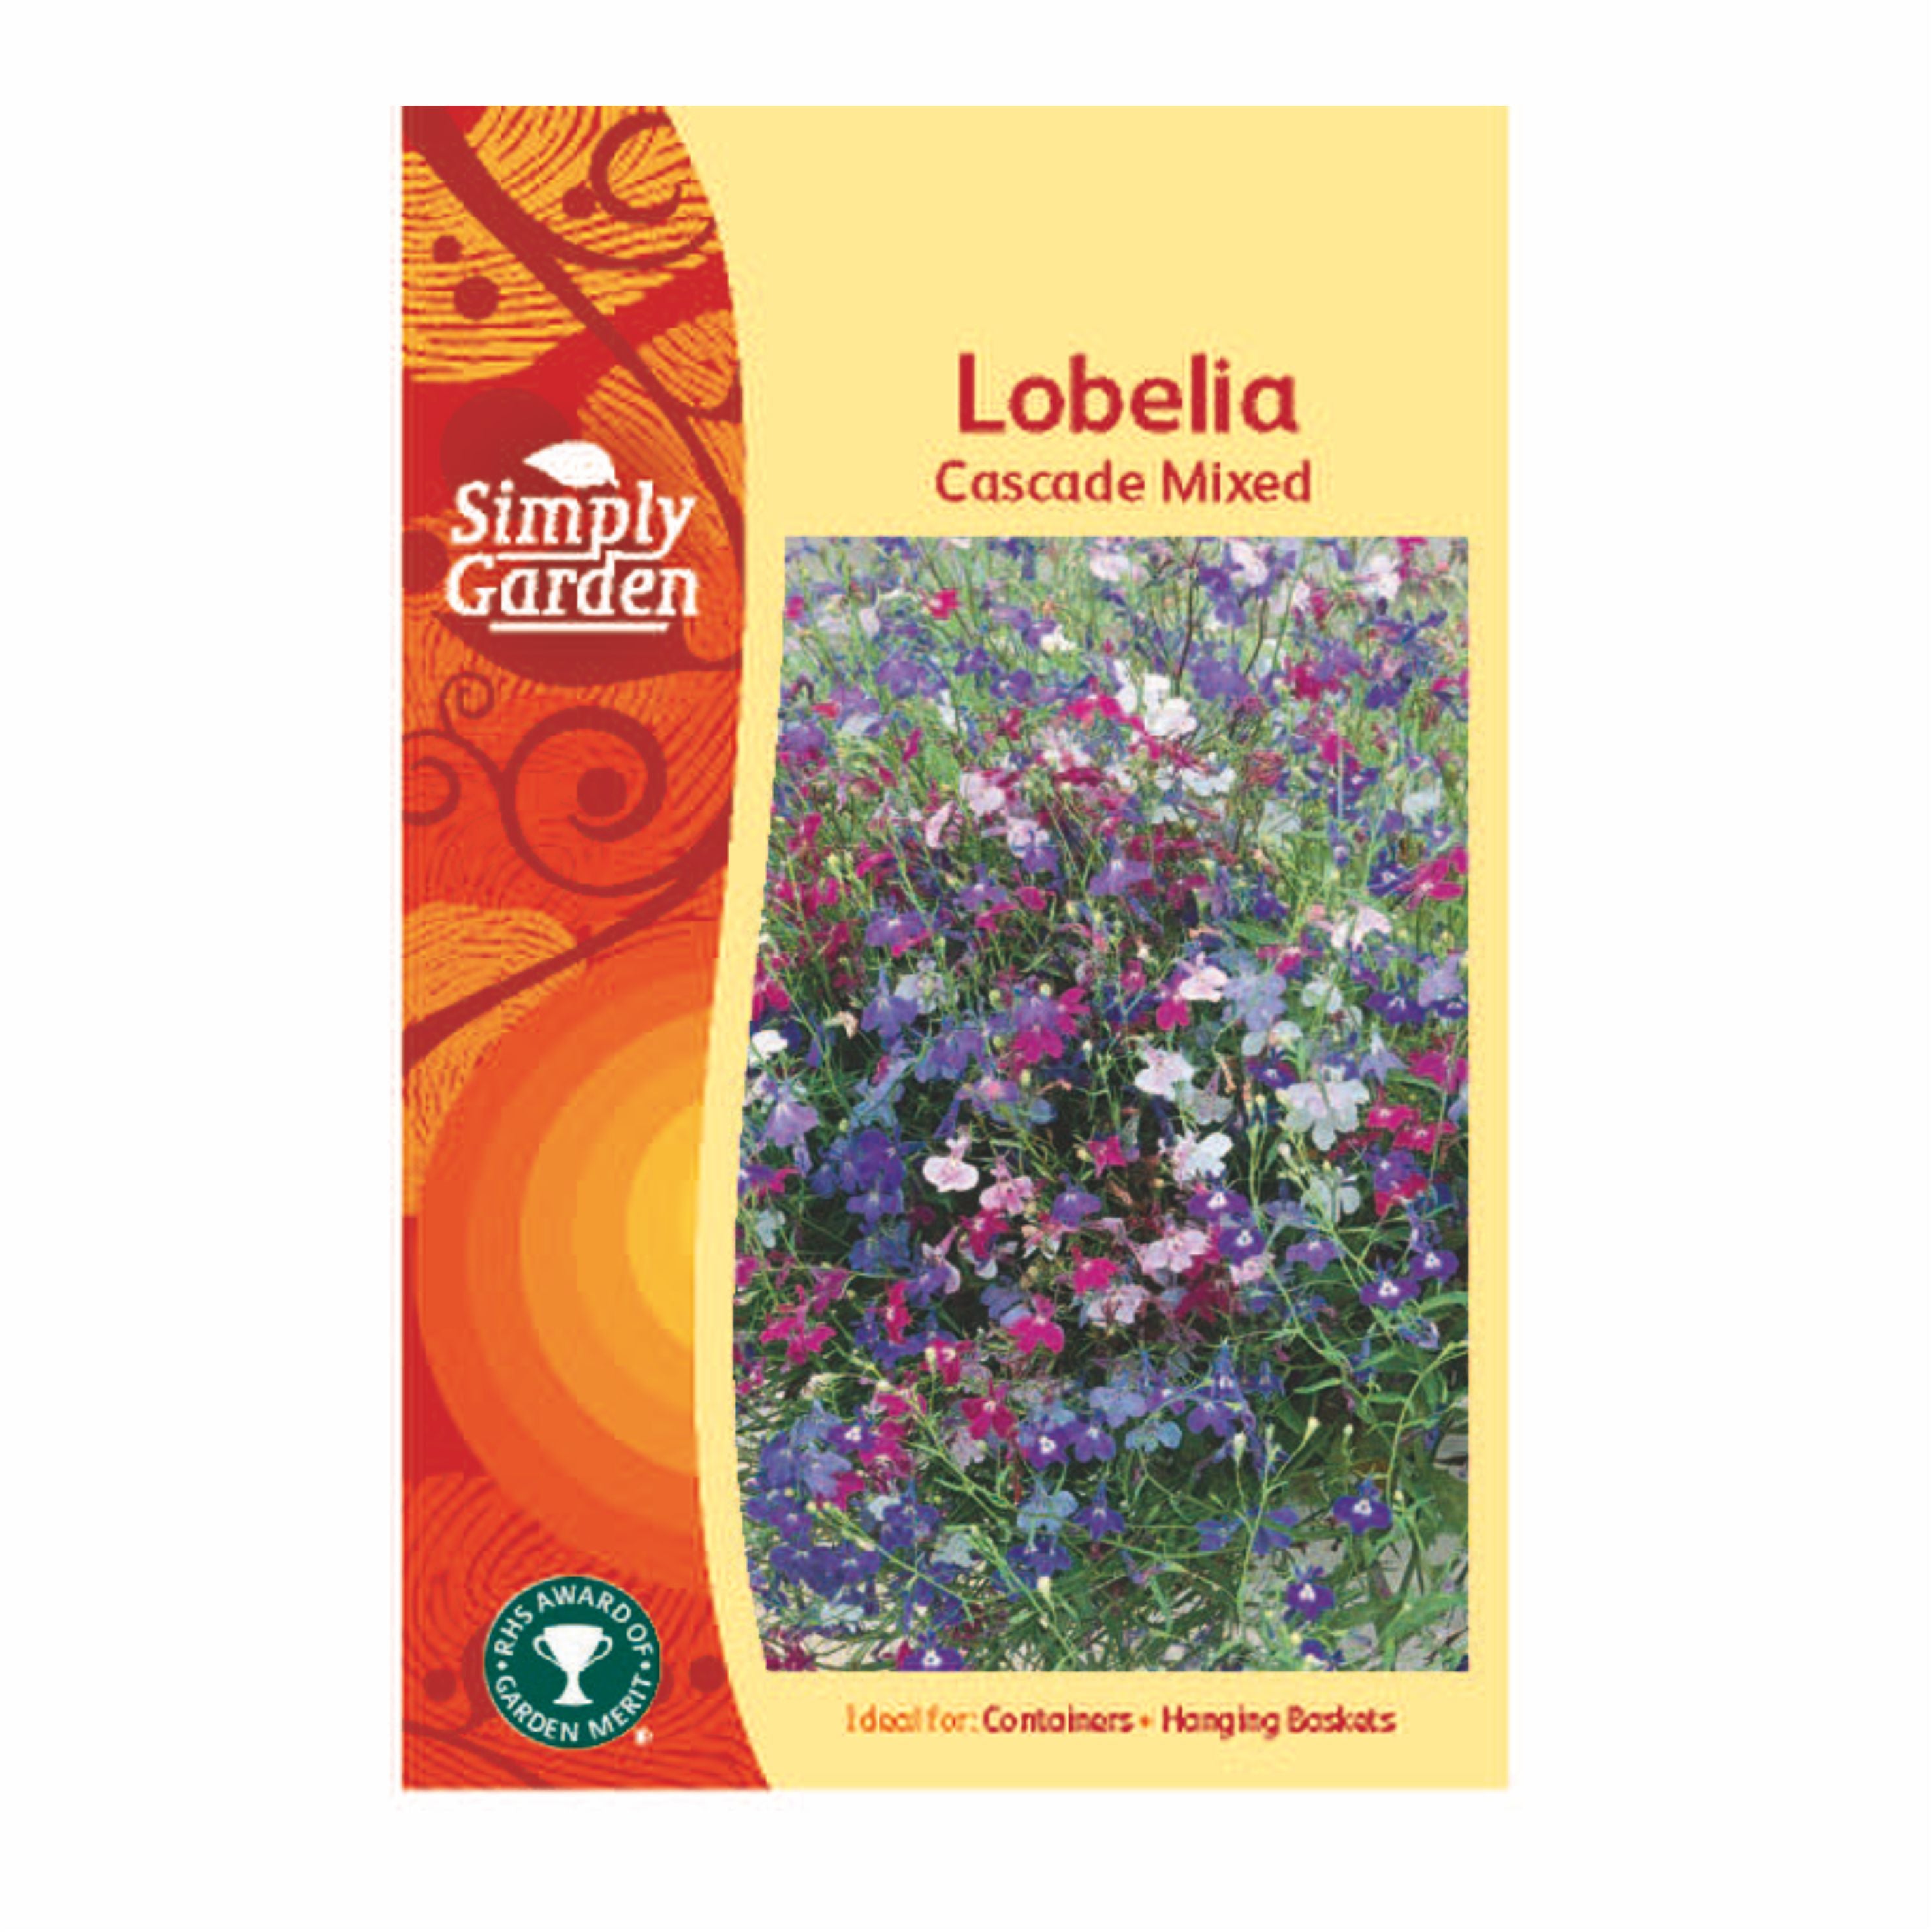 Lobelia Cascade Mixed